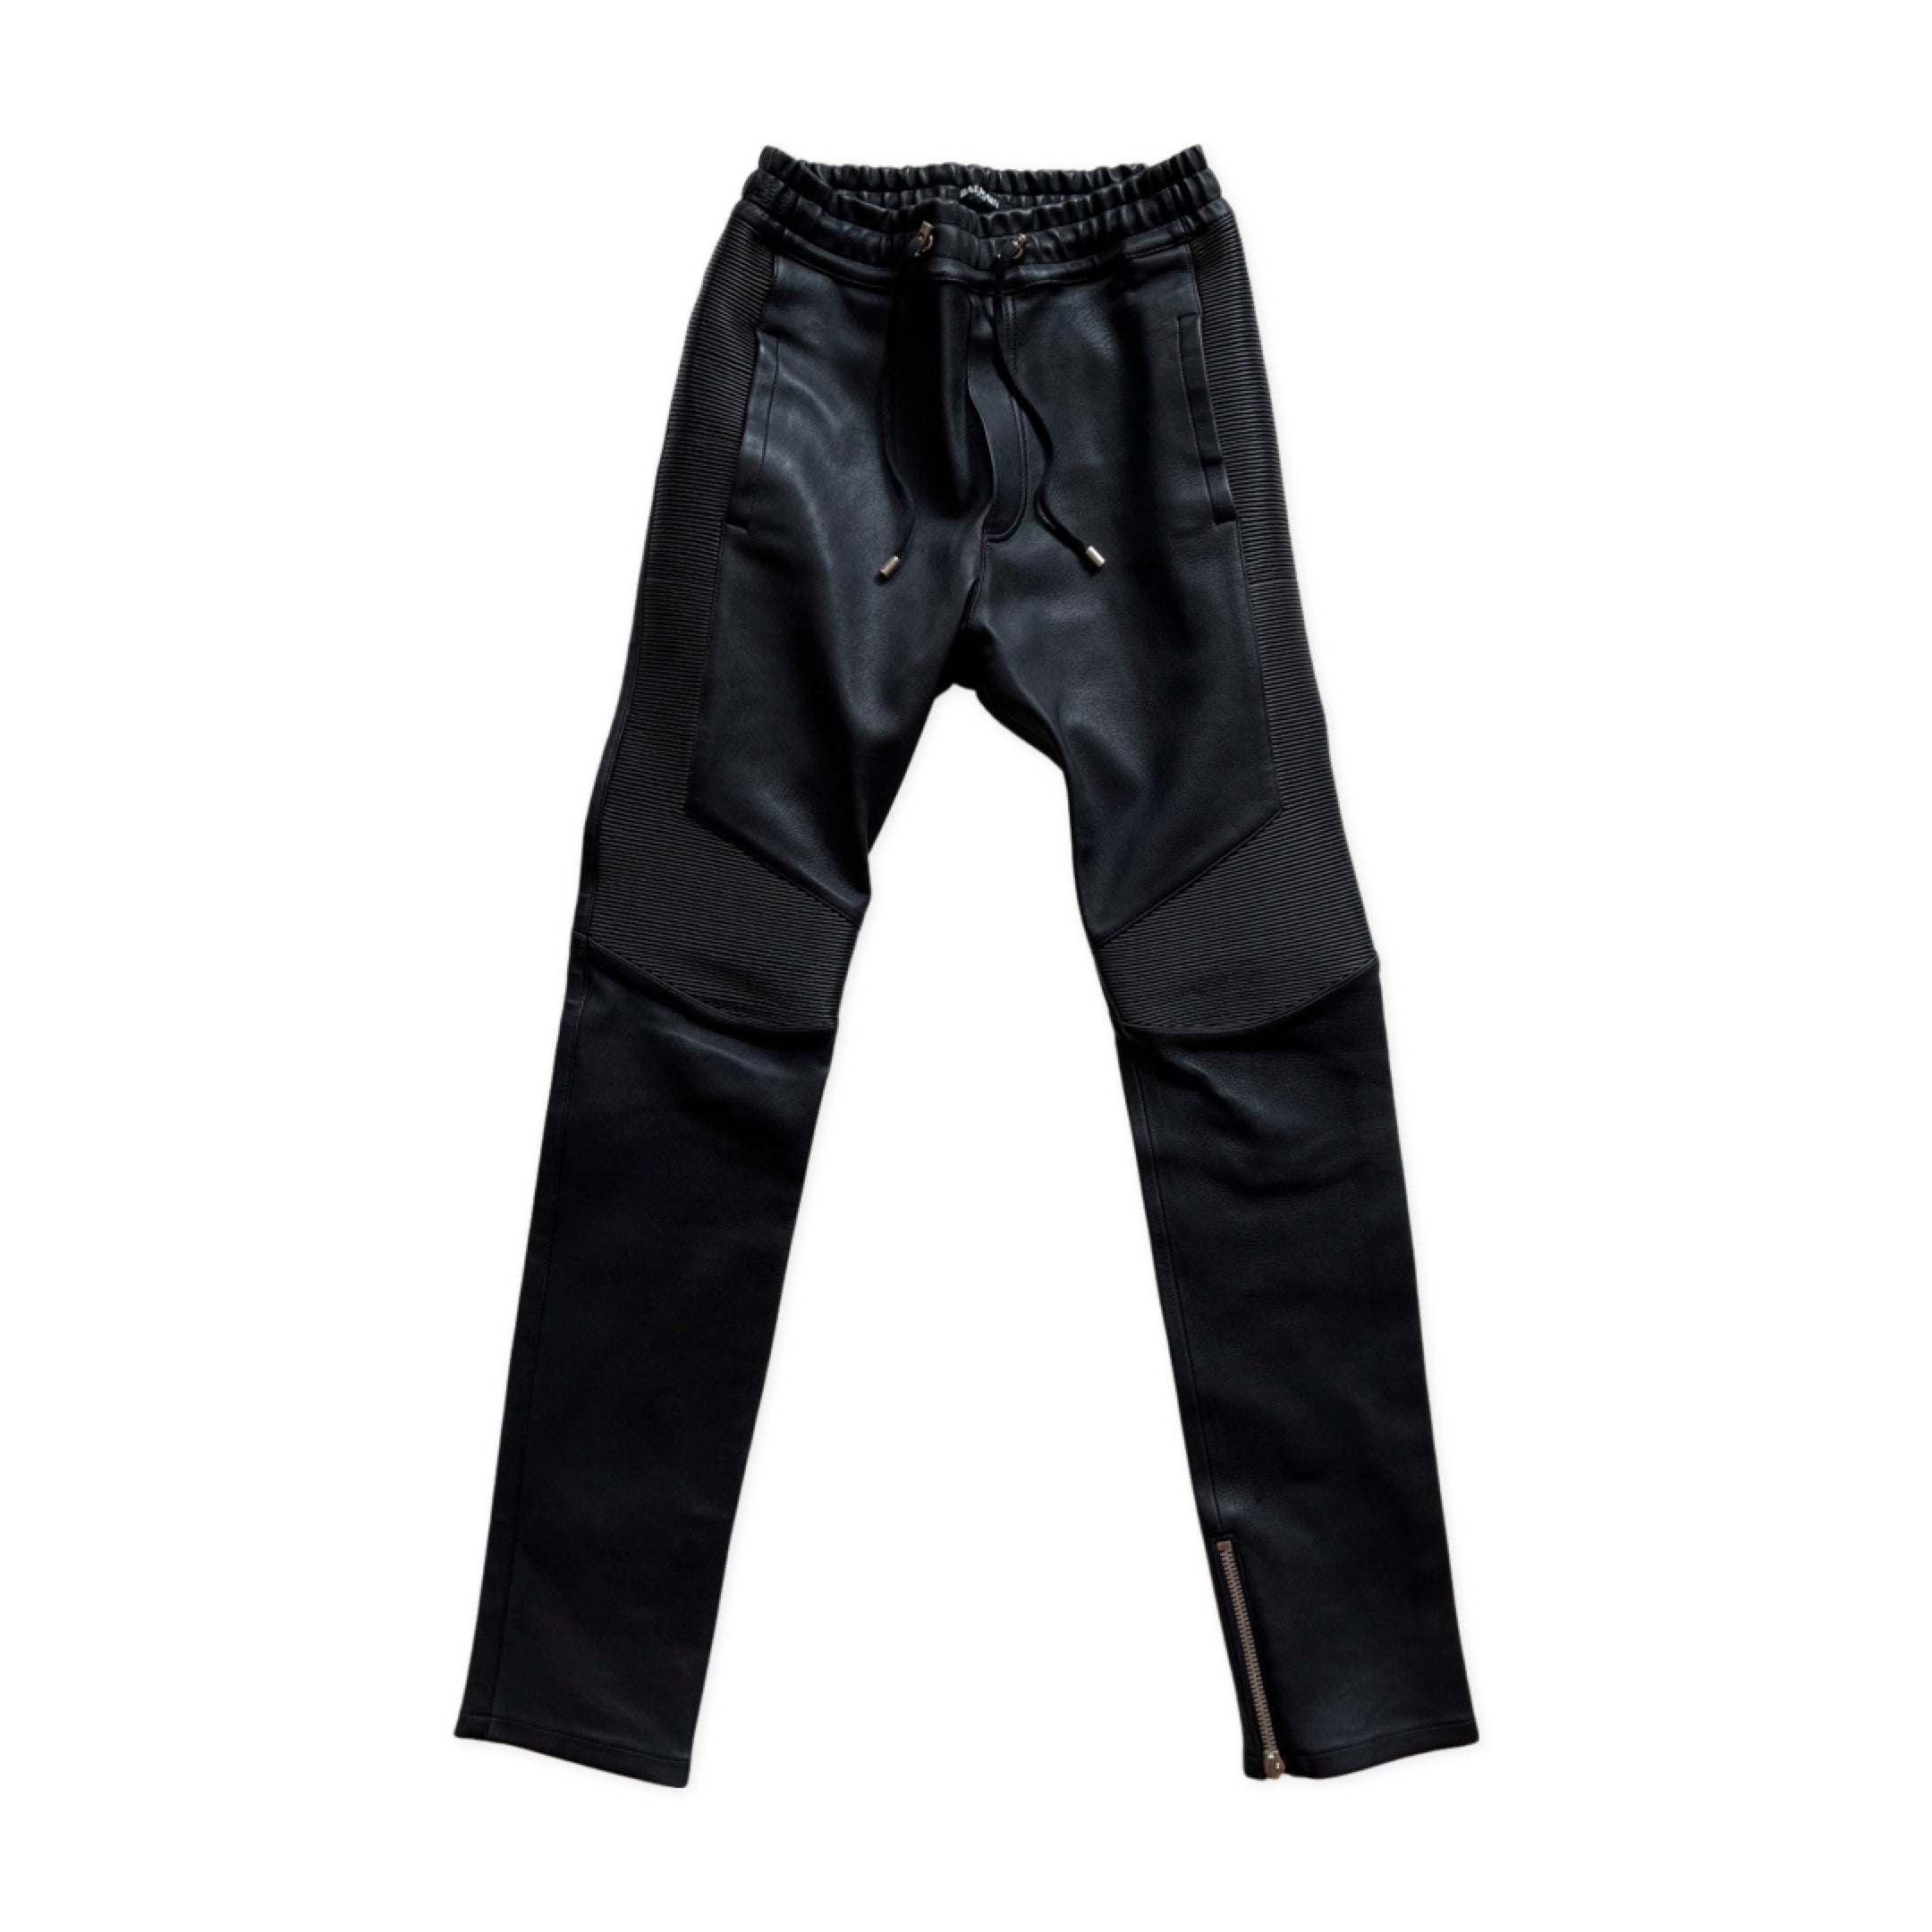 Balmain Leather Biker Jeans Secod Kultuee Flash Sales | website.jkuat.ac.ke